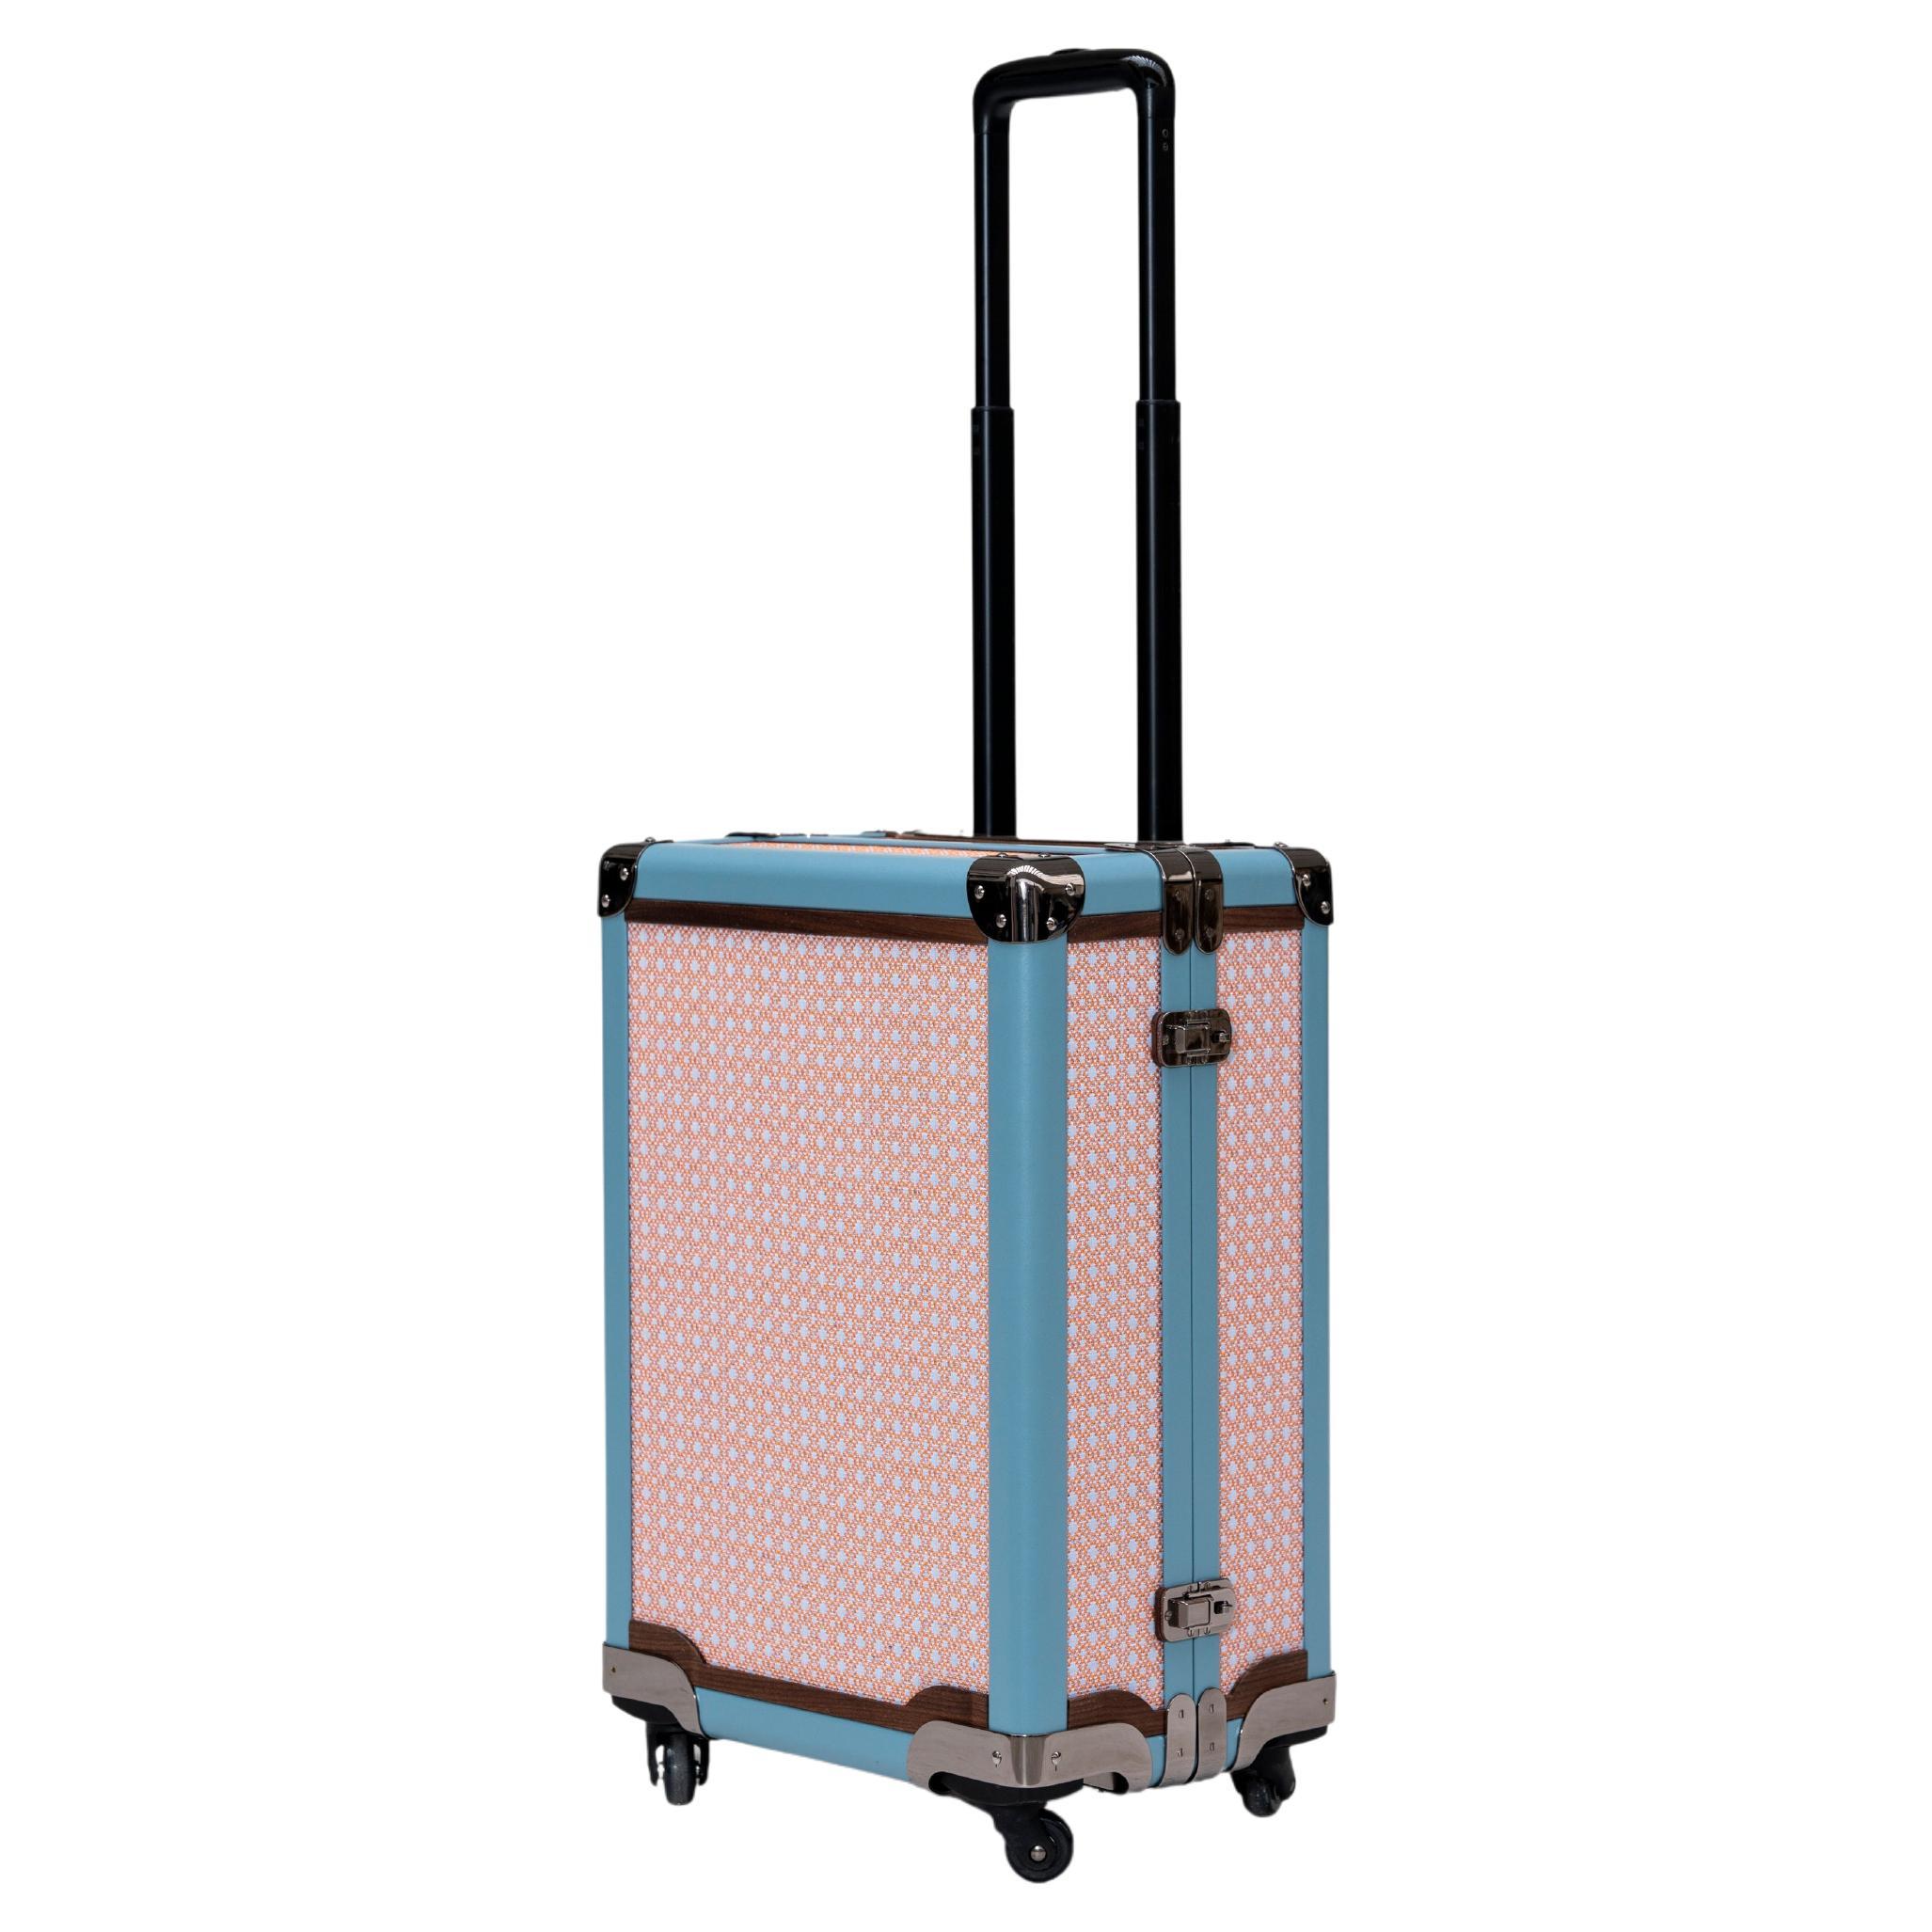 PORTOFINO - Light blue trolley - Your travel companion